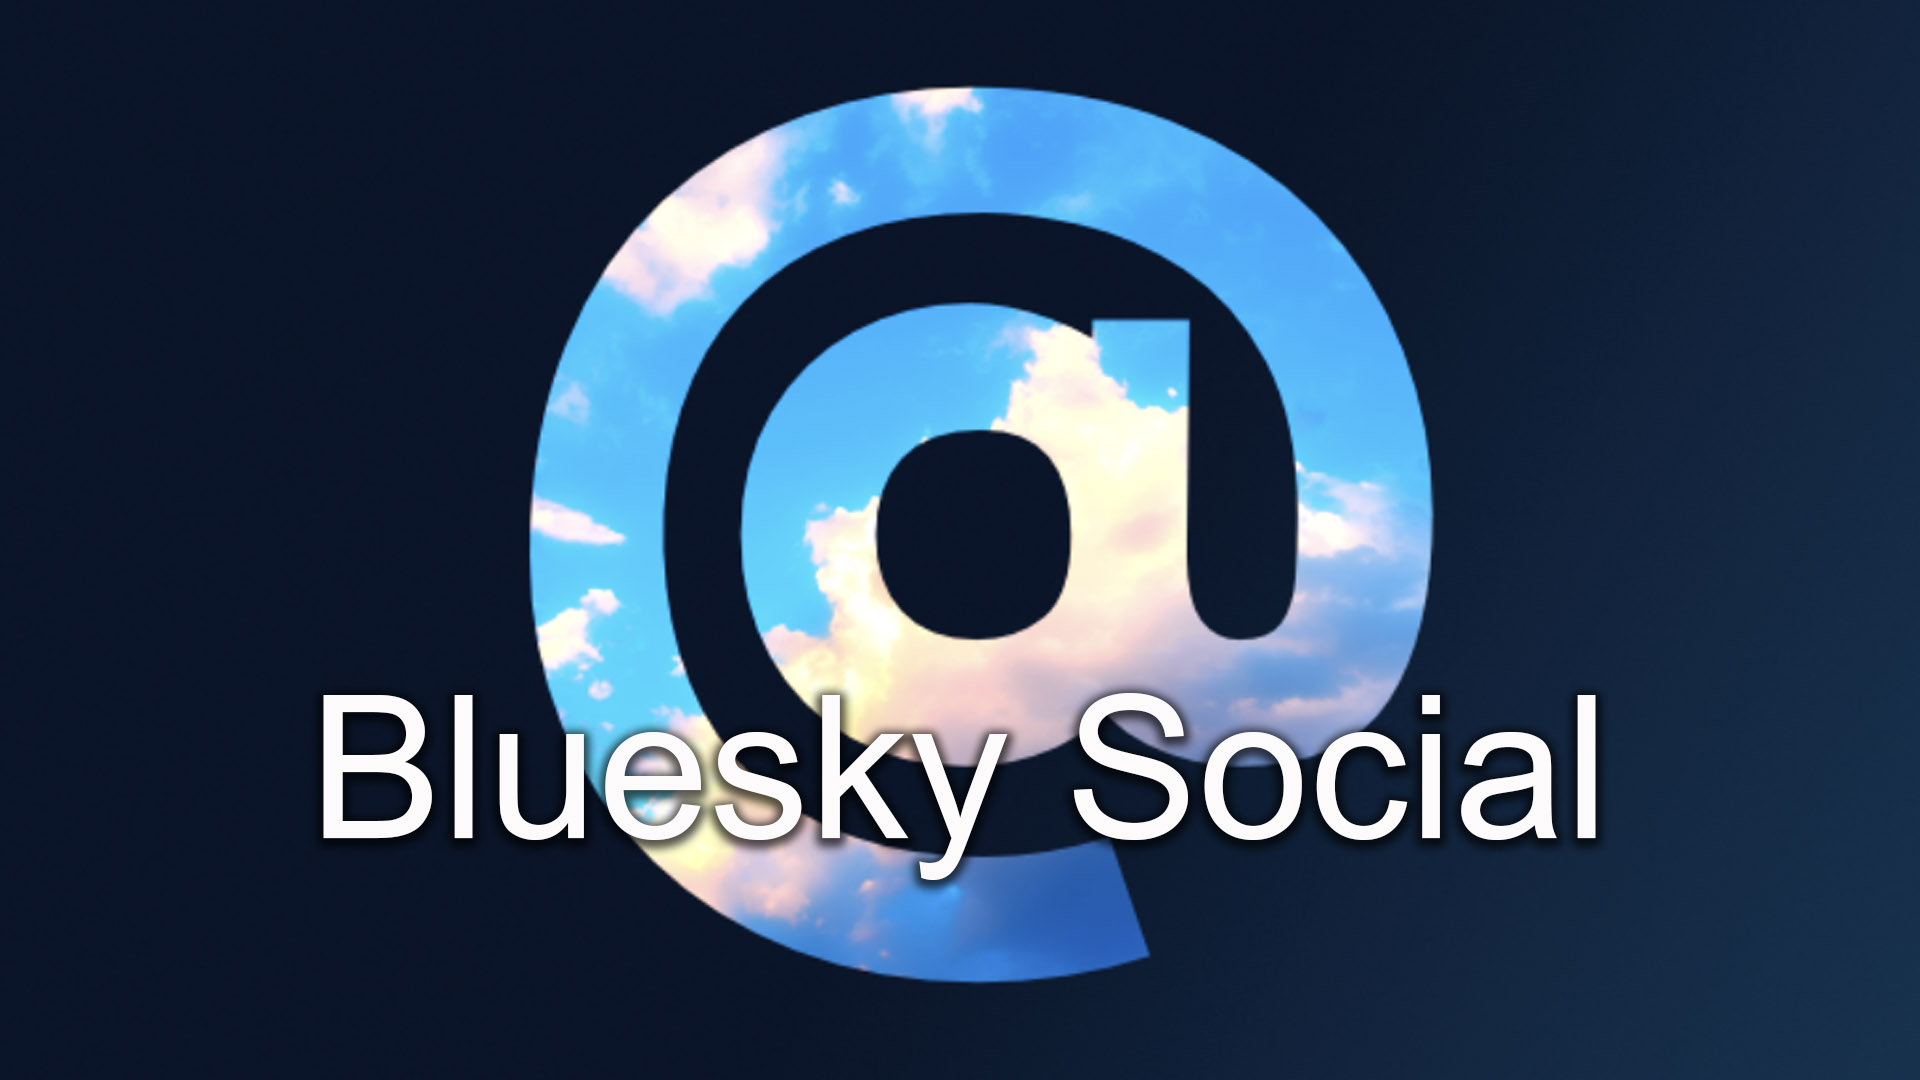 Bluesky Social – A decentralized Twitter developed by Jack Dorsey